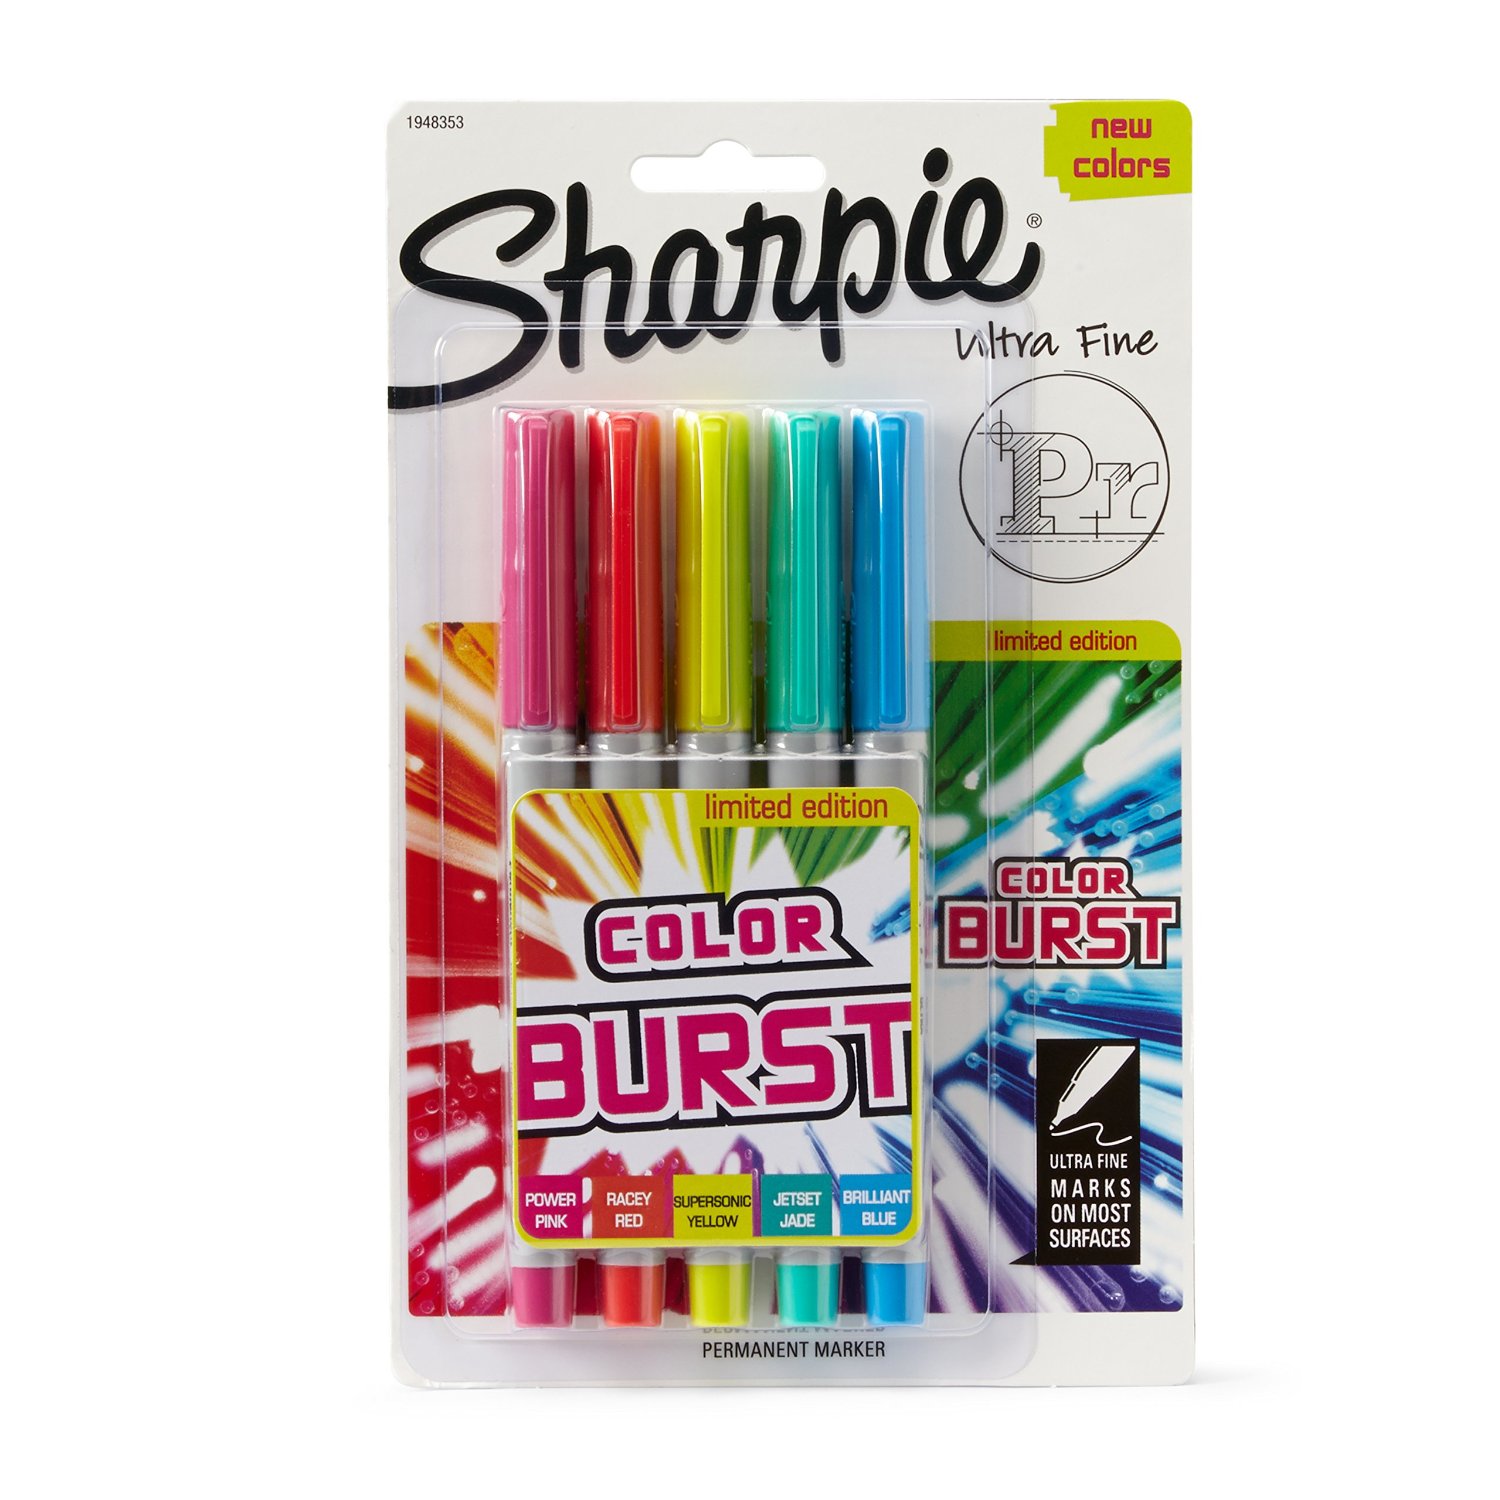 Sharpie Color Burst Permanent Markers 5-Pack – Just $2.68!